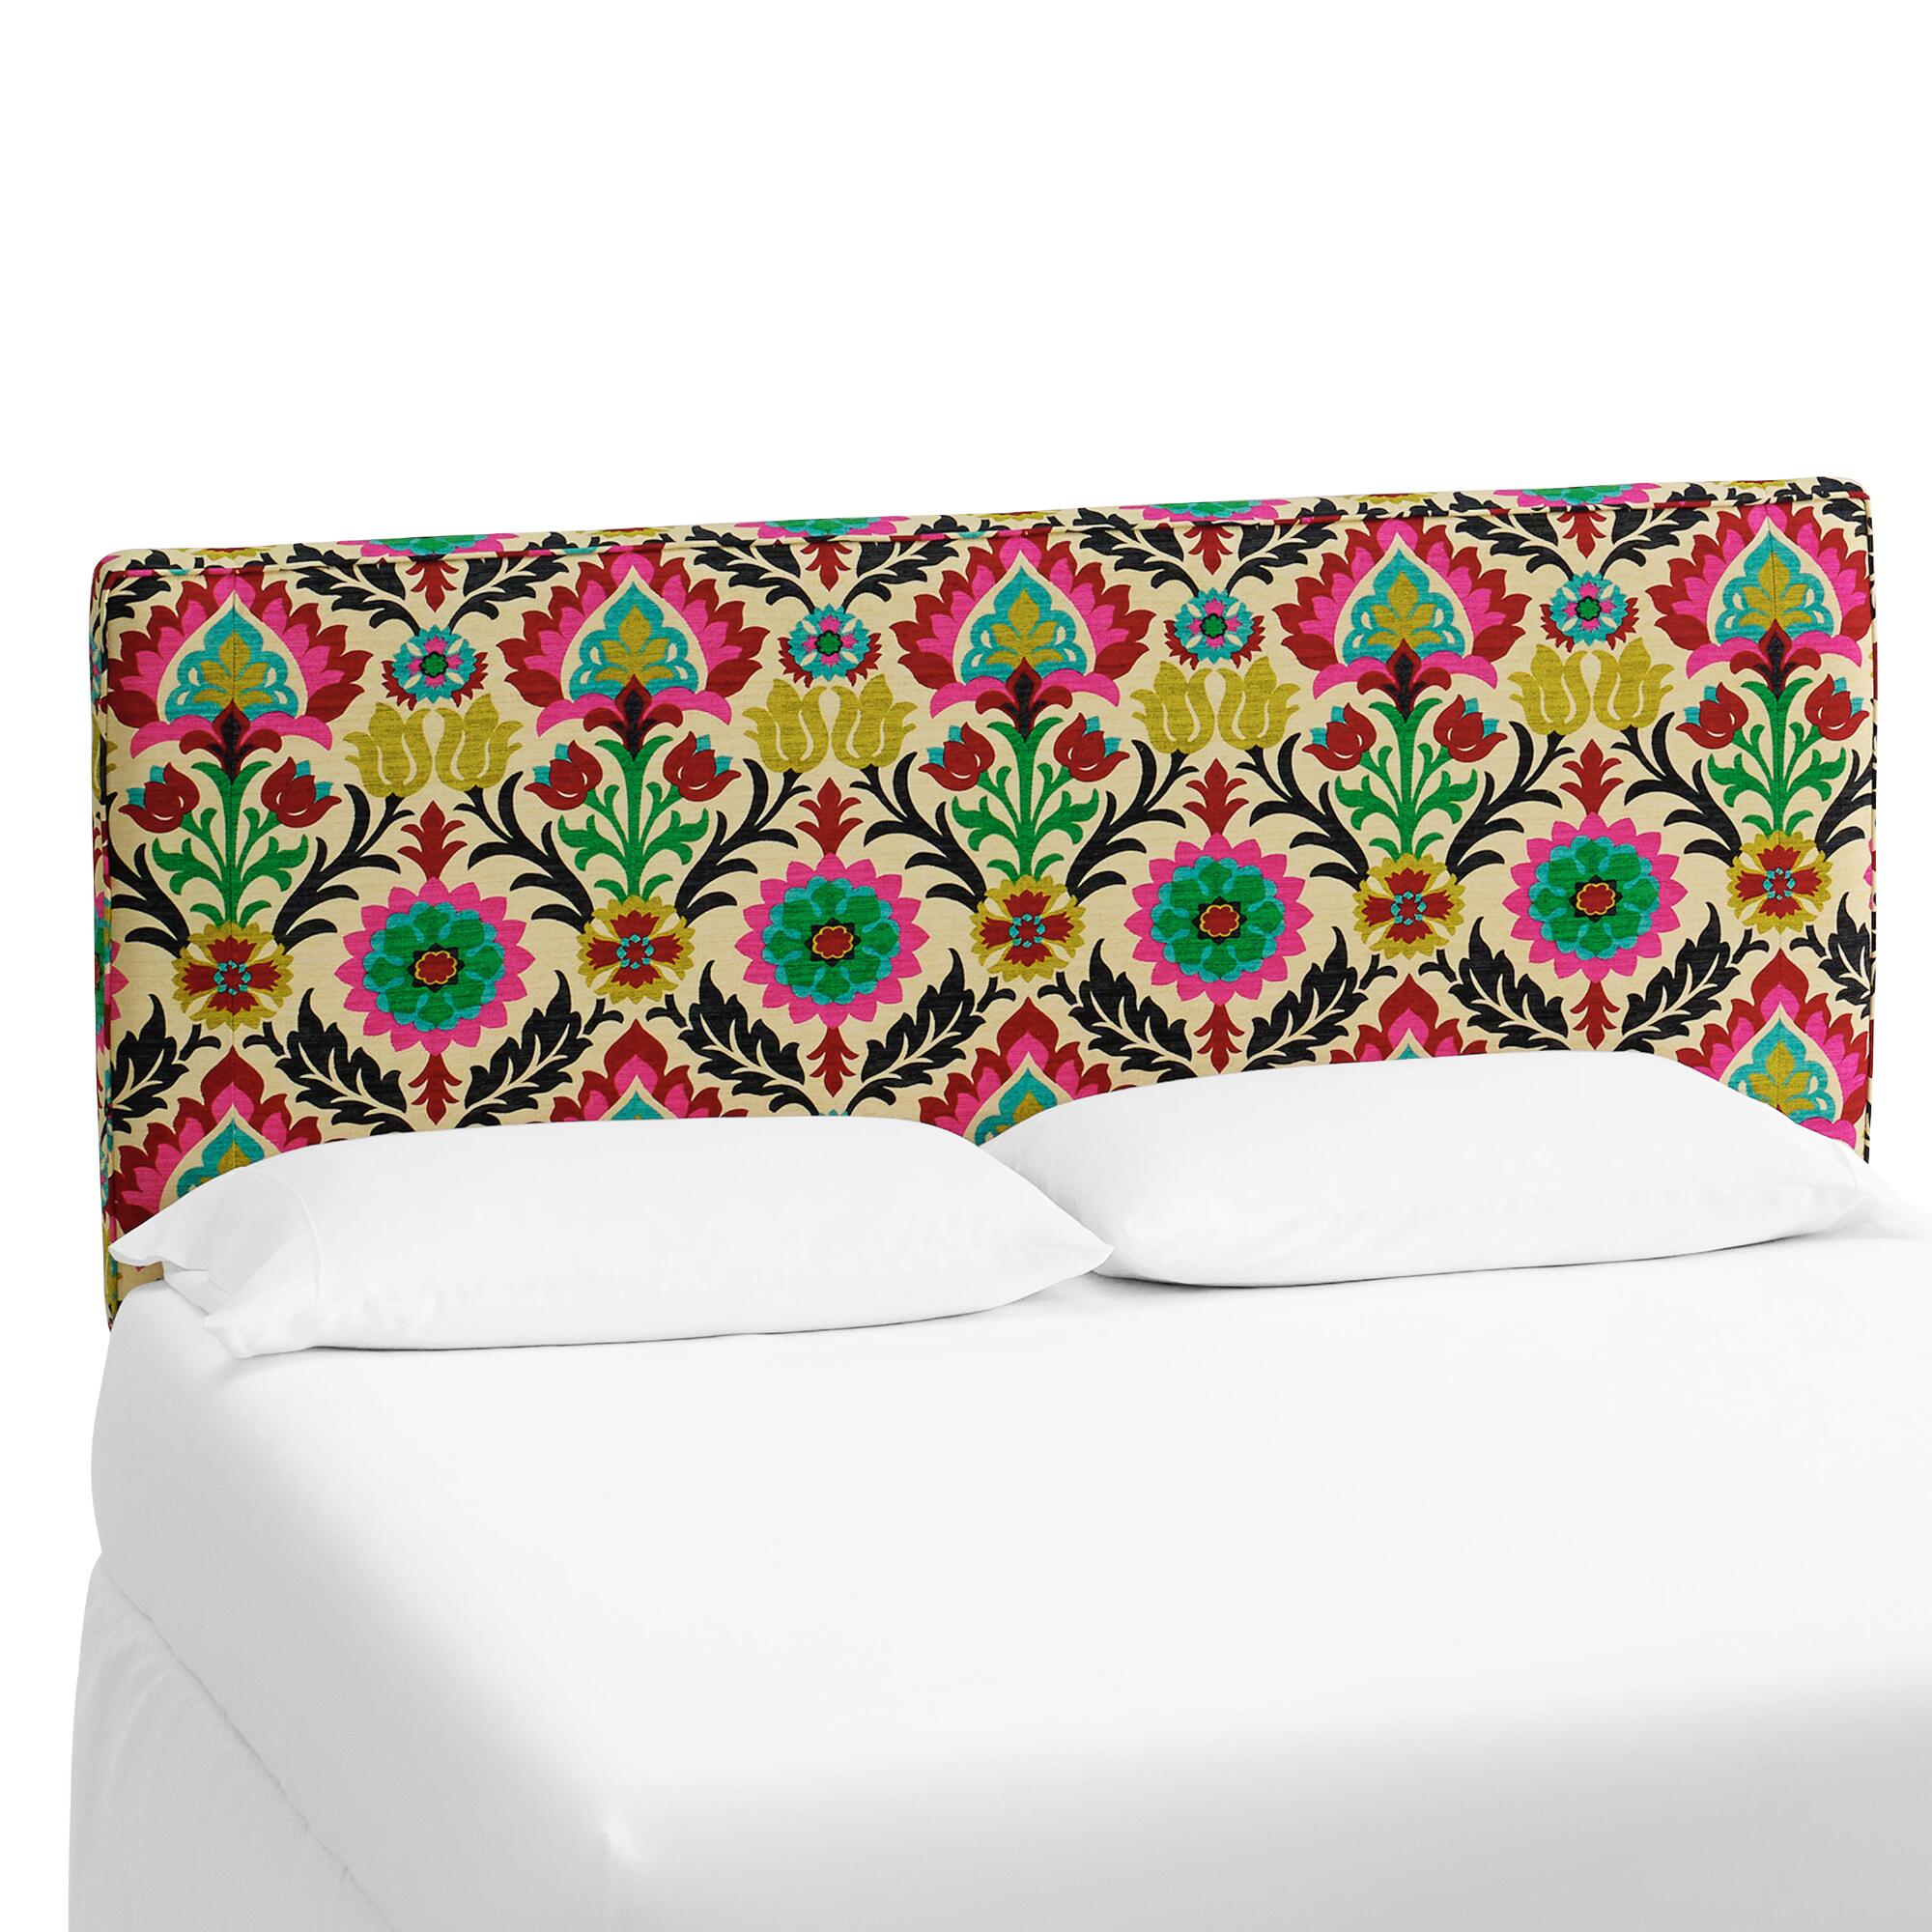 Desert Santa Maria Loran Upholstered Headboard: Multi - Fabric - California King Headboard by World Market